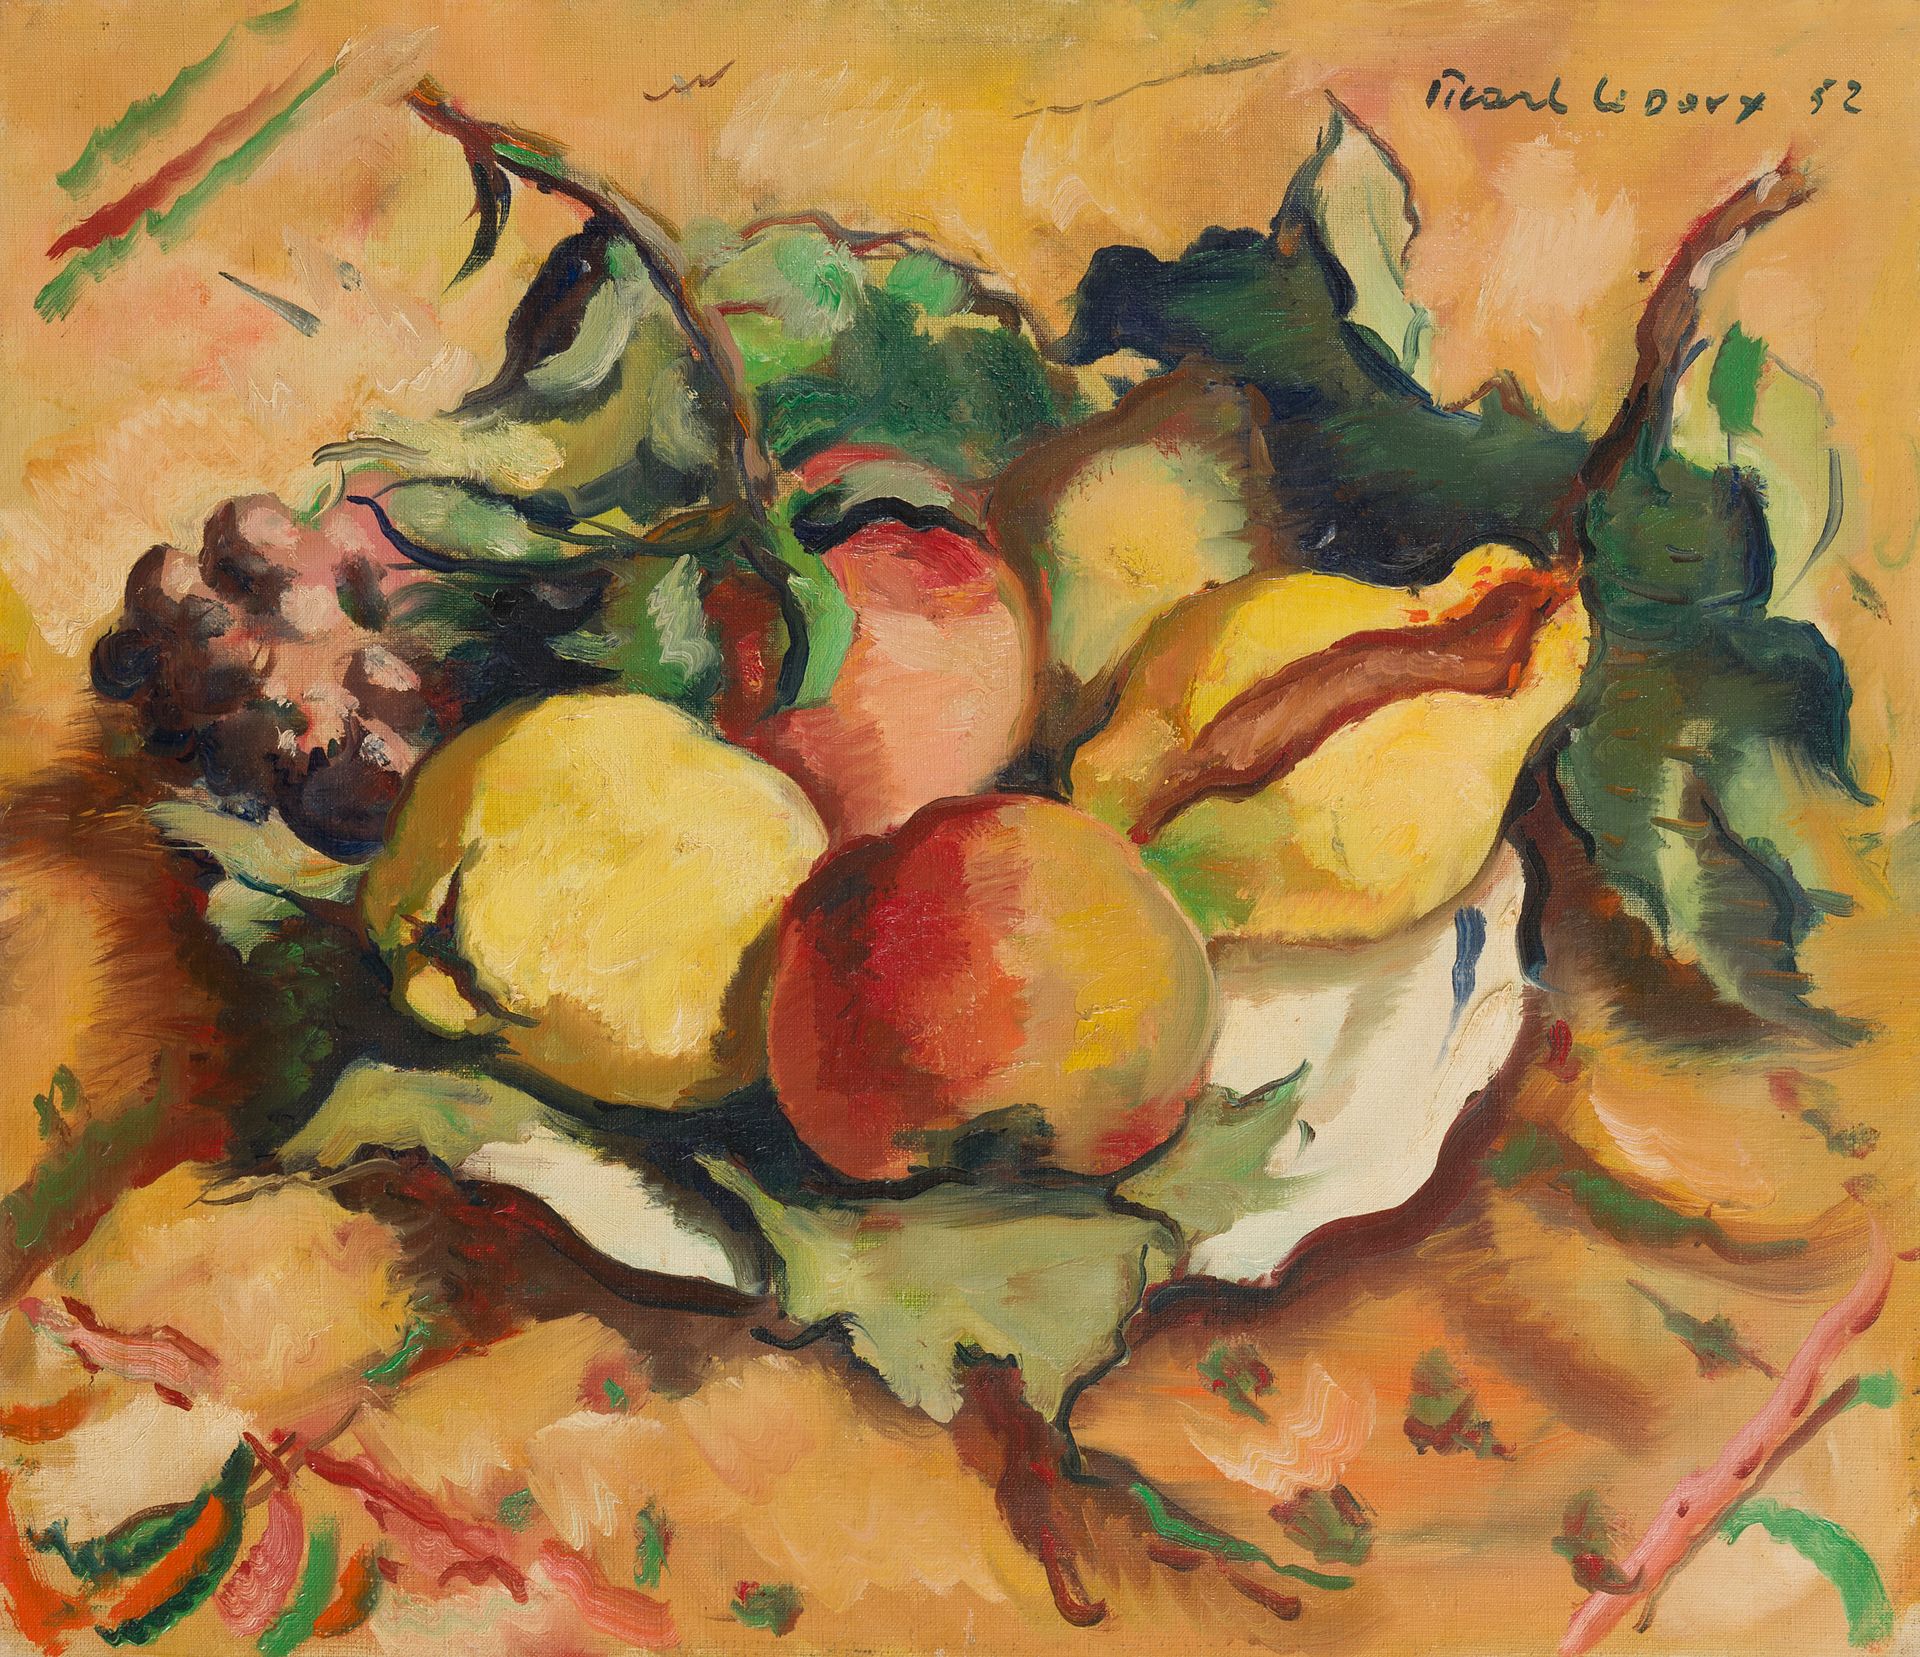 Null 查尔斯-皮卡特-勒杜 (1881-1959)
水果，1952年
布面油画，右上方有签名和日期
46 x 55厘米